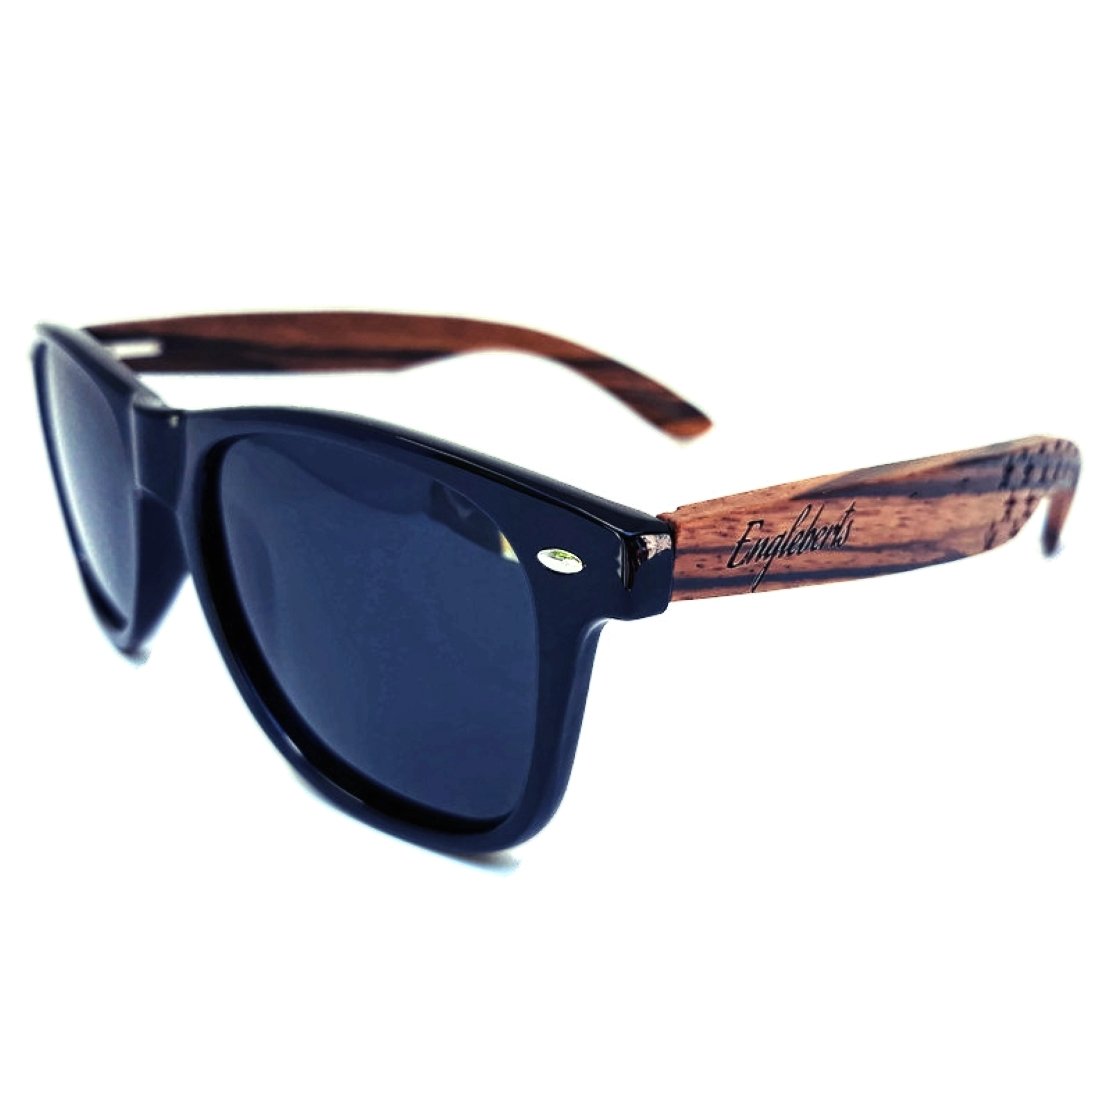 Stars and Bars Sunglasses - Shop Luxurious57